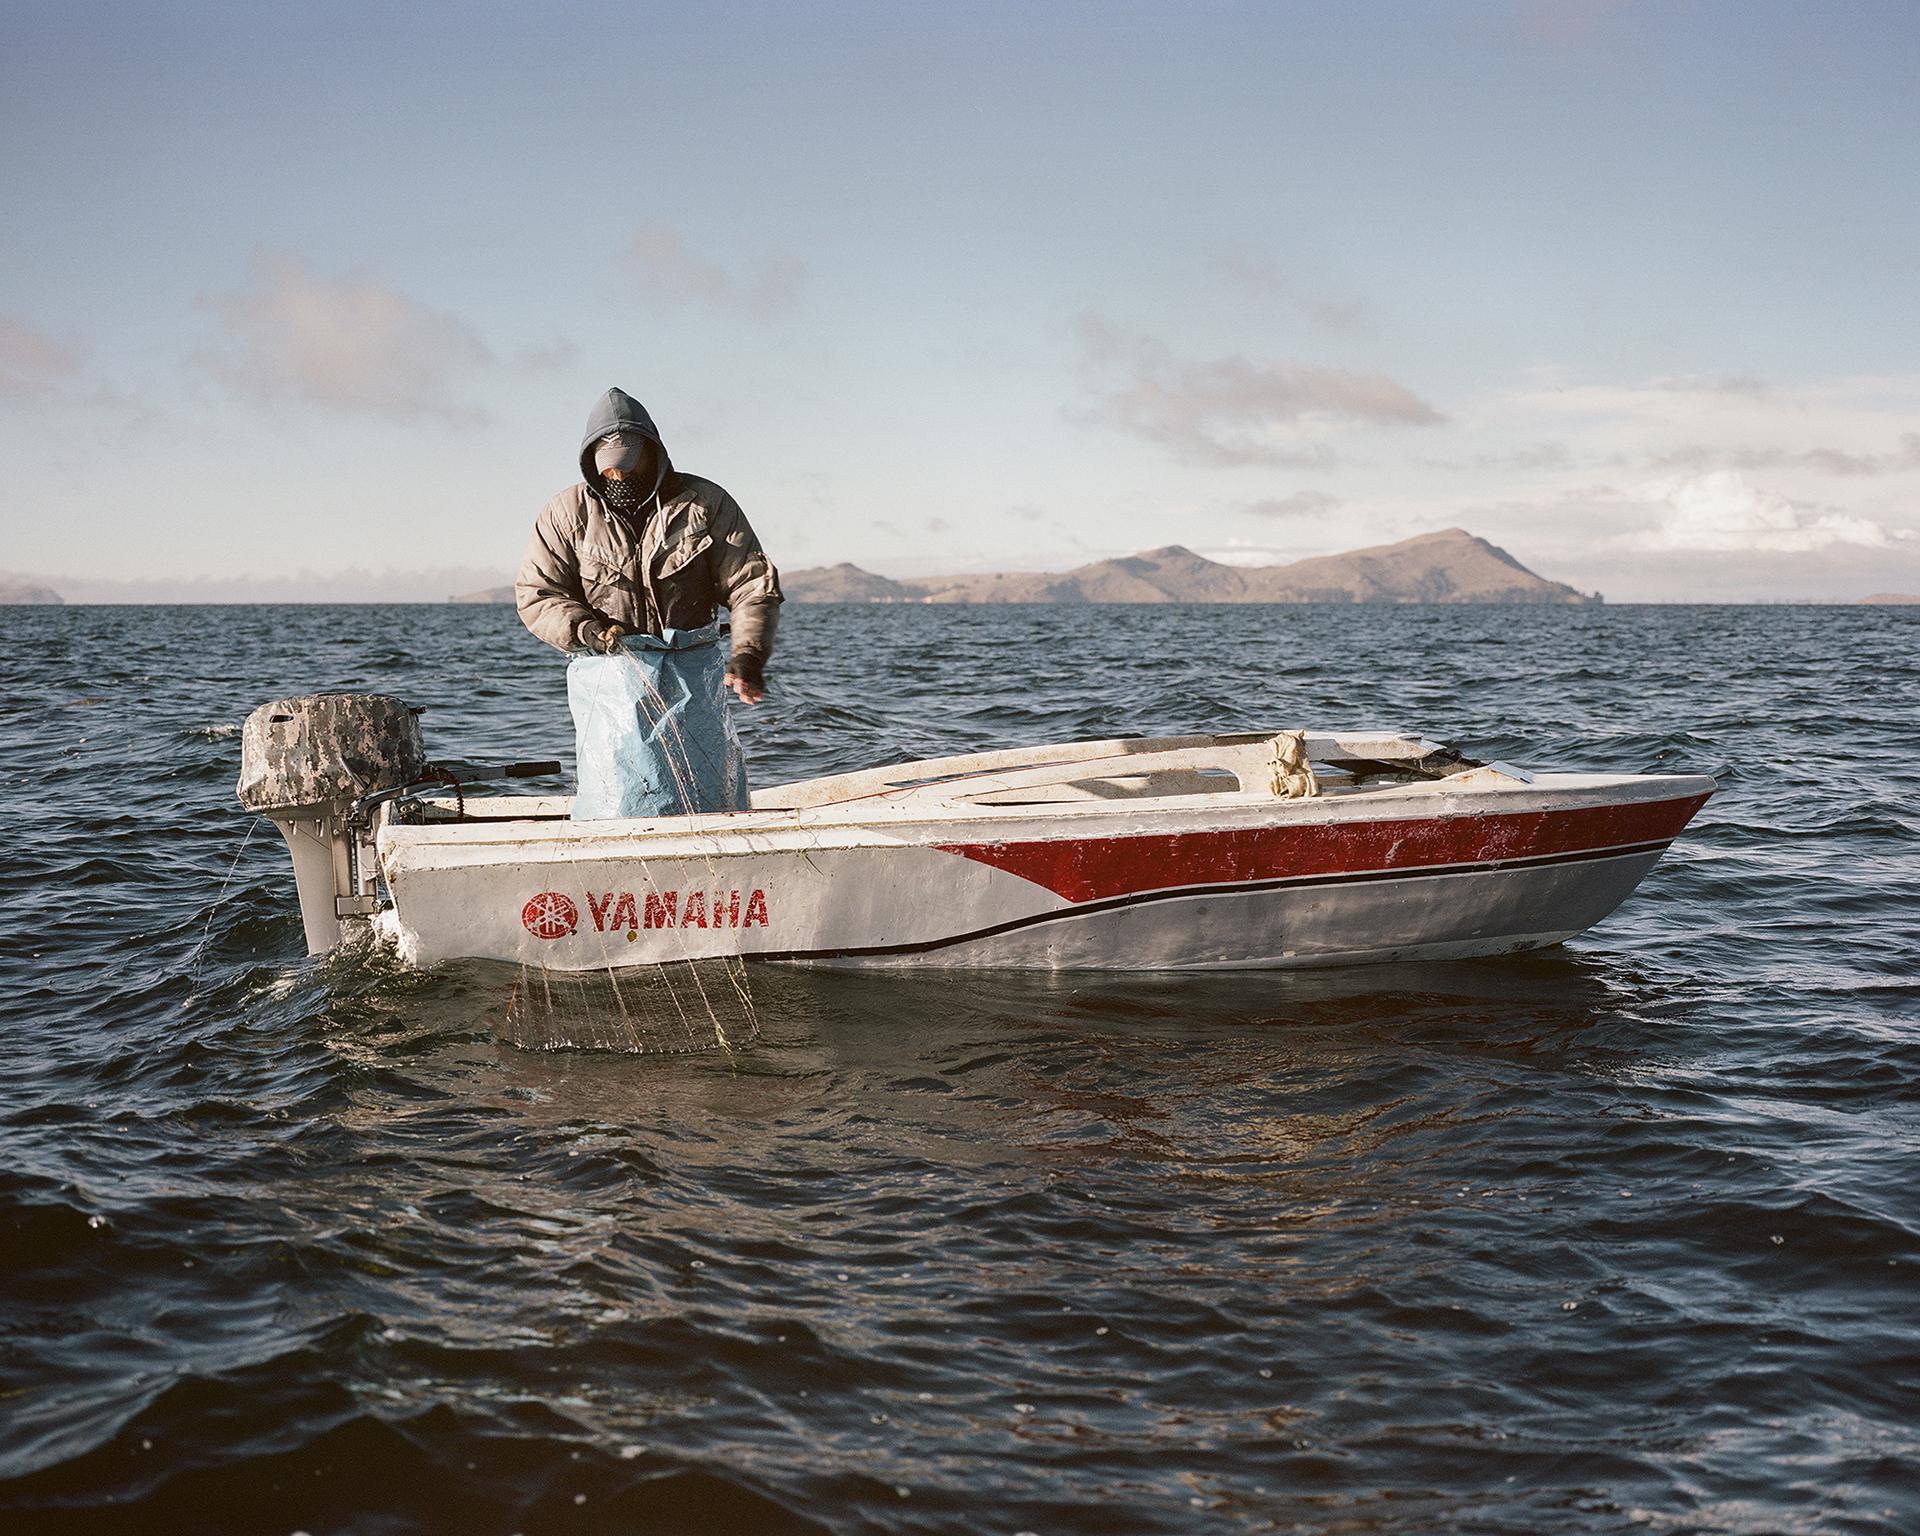 New York Photography Awards Winner - A Fisherman on Lake Titicaca